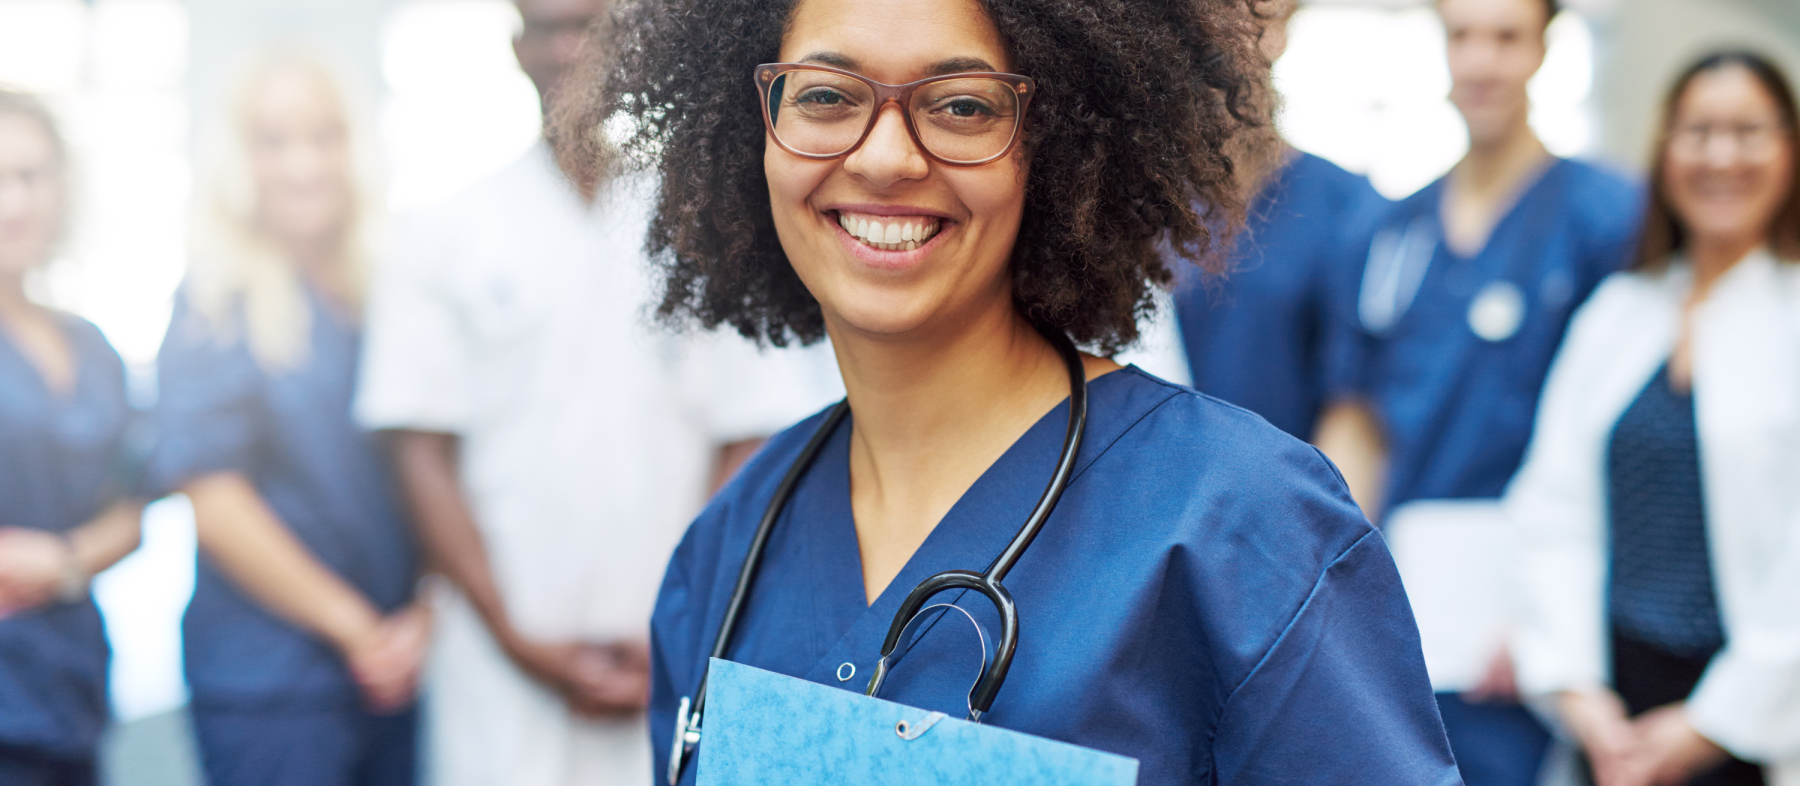 A woman in scrubs holds a folder